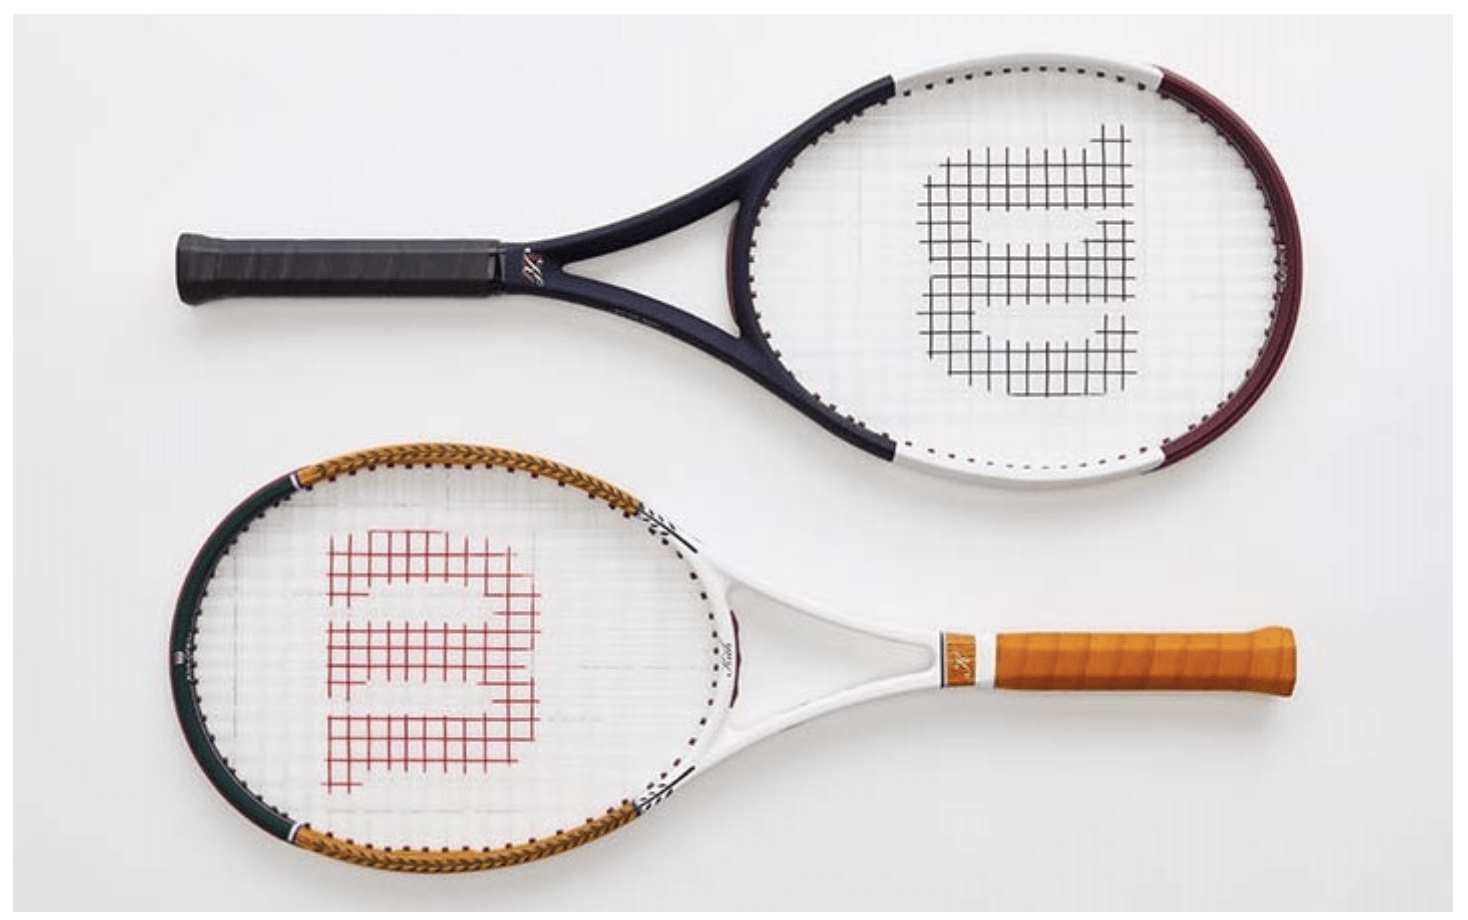 Wilson Kith Racquets - Tennisnerd.net - What is Kith?